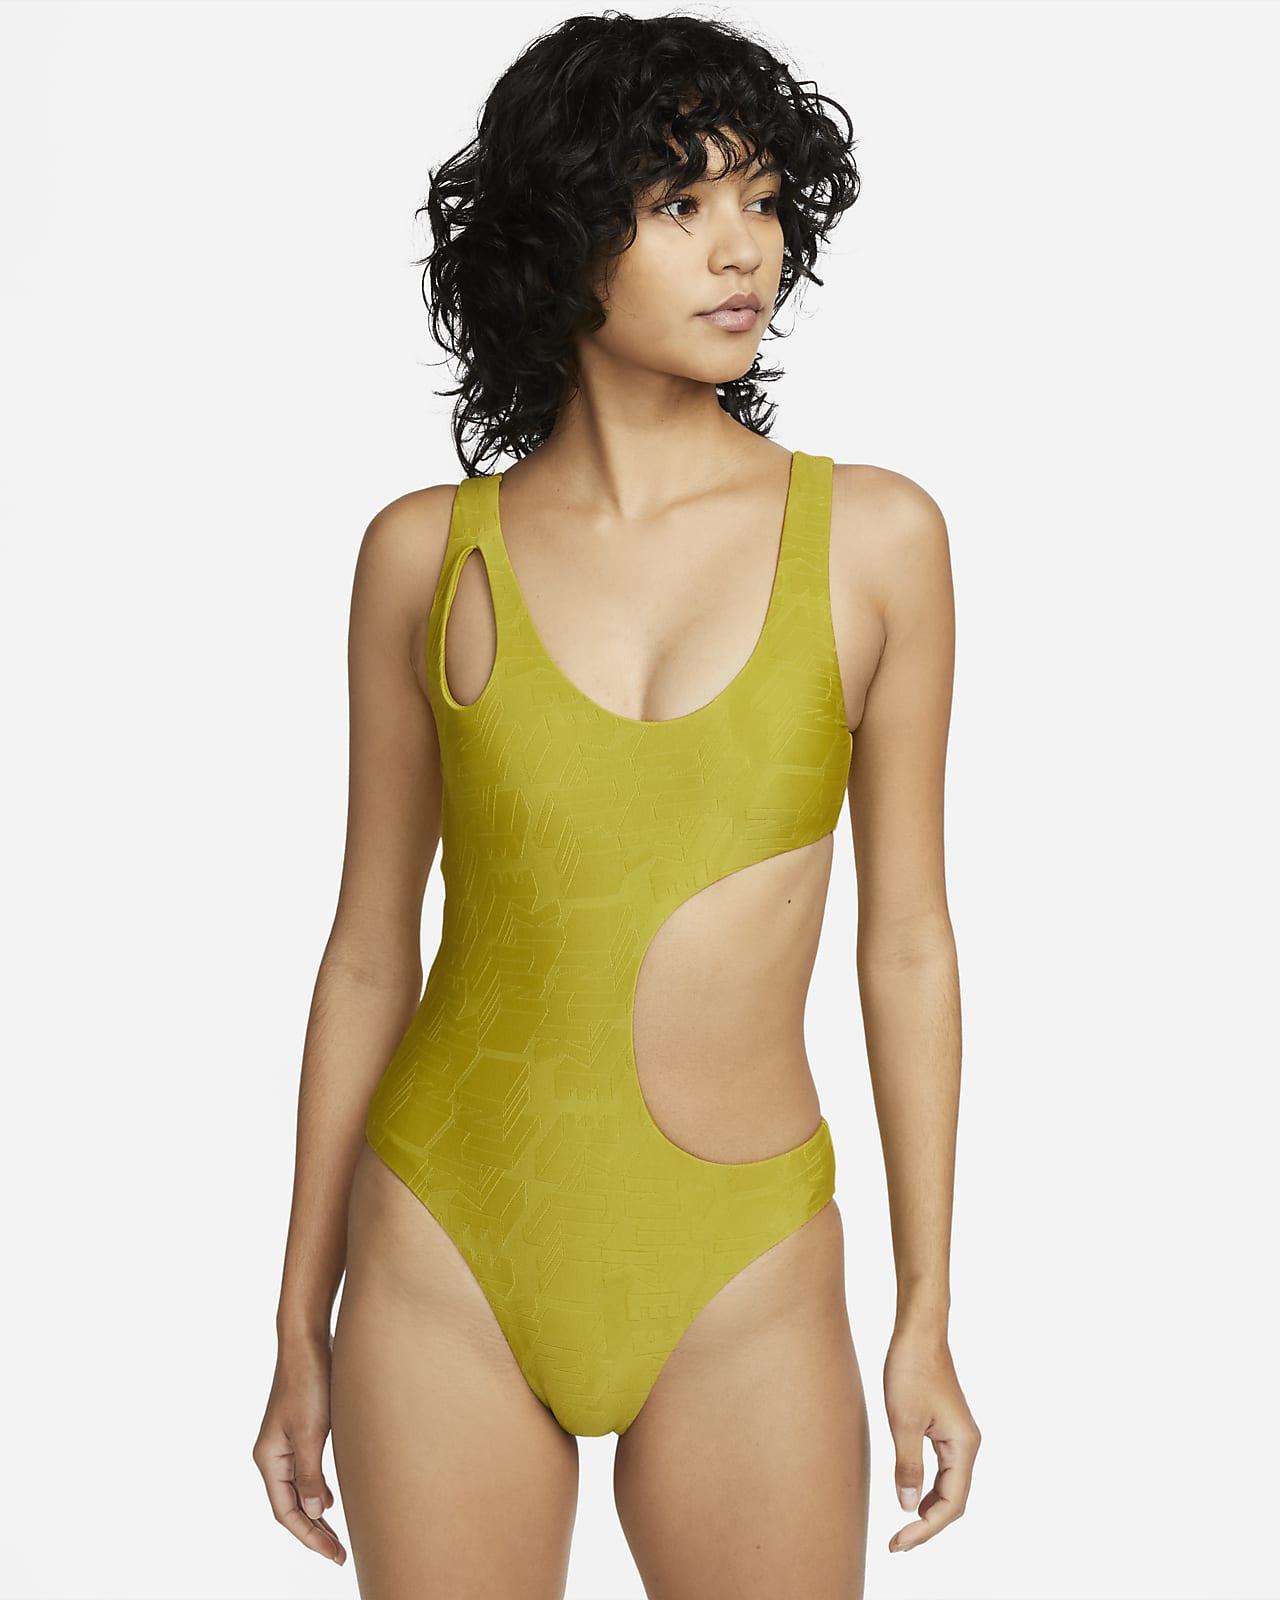 Buy Nike Women's Swimsuit Bottoms Polyamide/Elastane Blend Ness SU92000  Black (Small) at